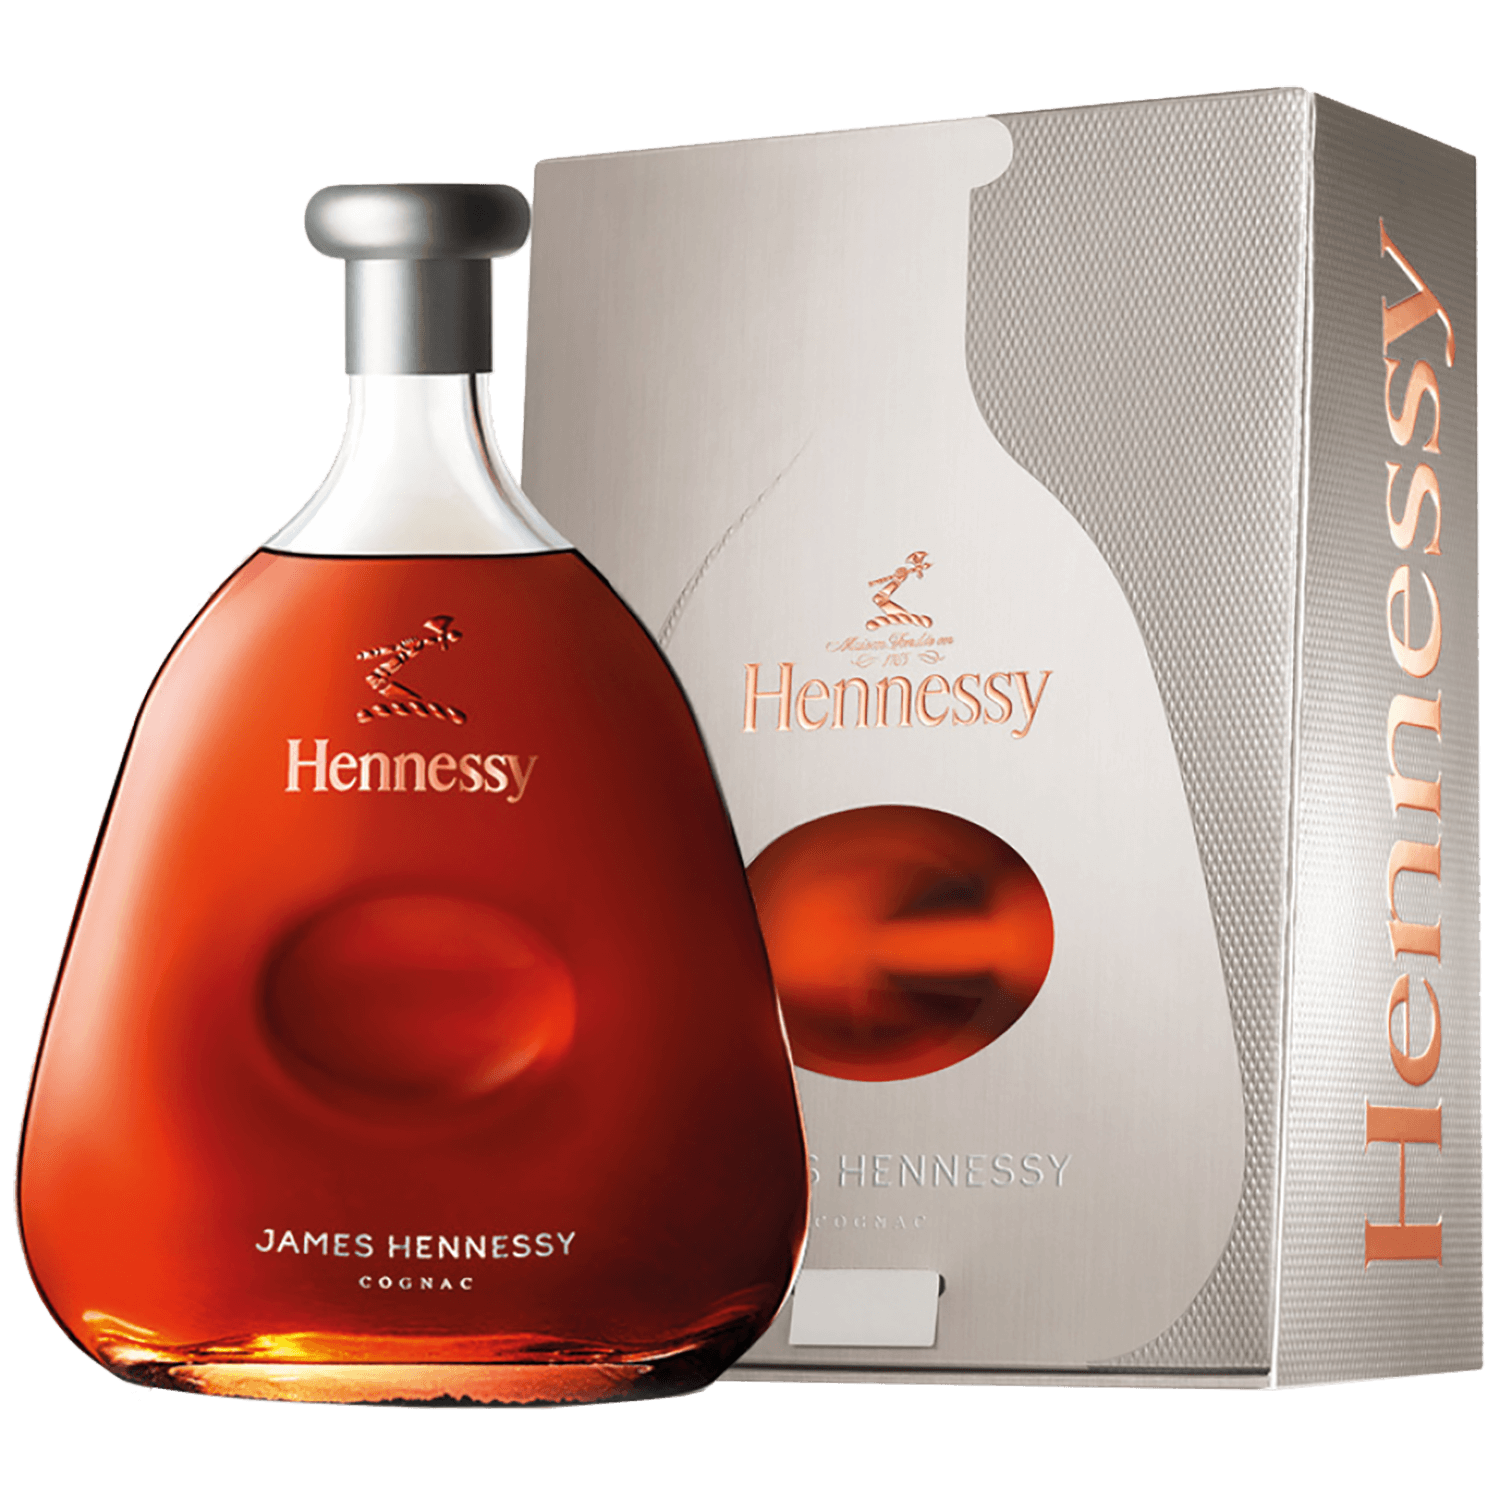 hennessy cognac xo gift box Hennessy James Hennessy Cognac (gift box)